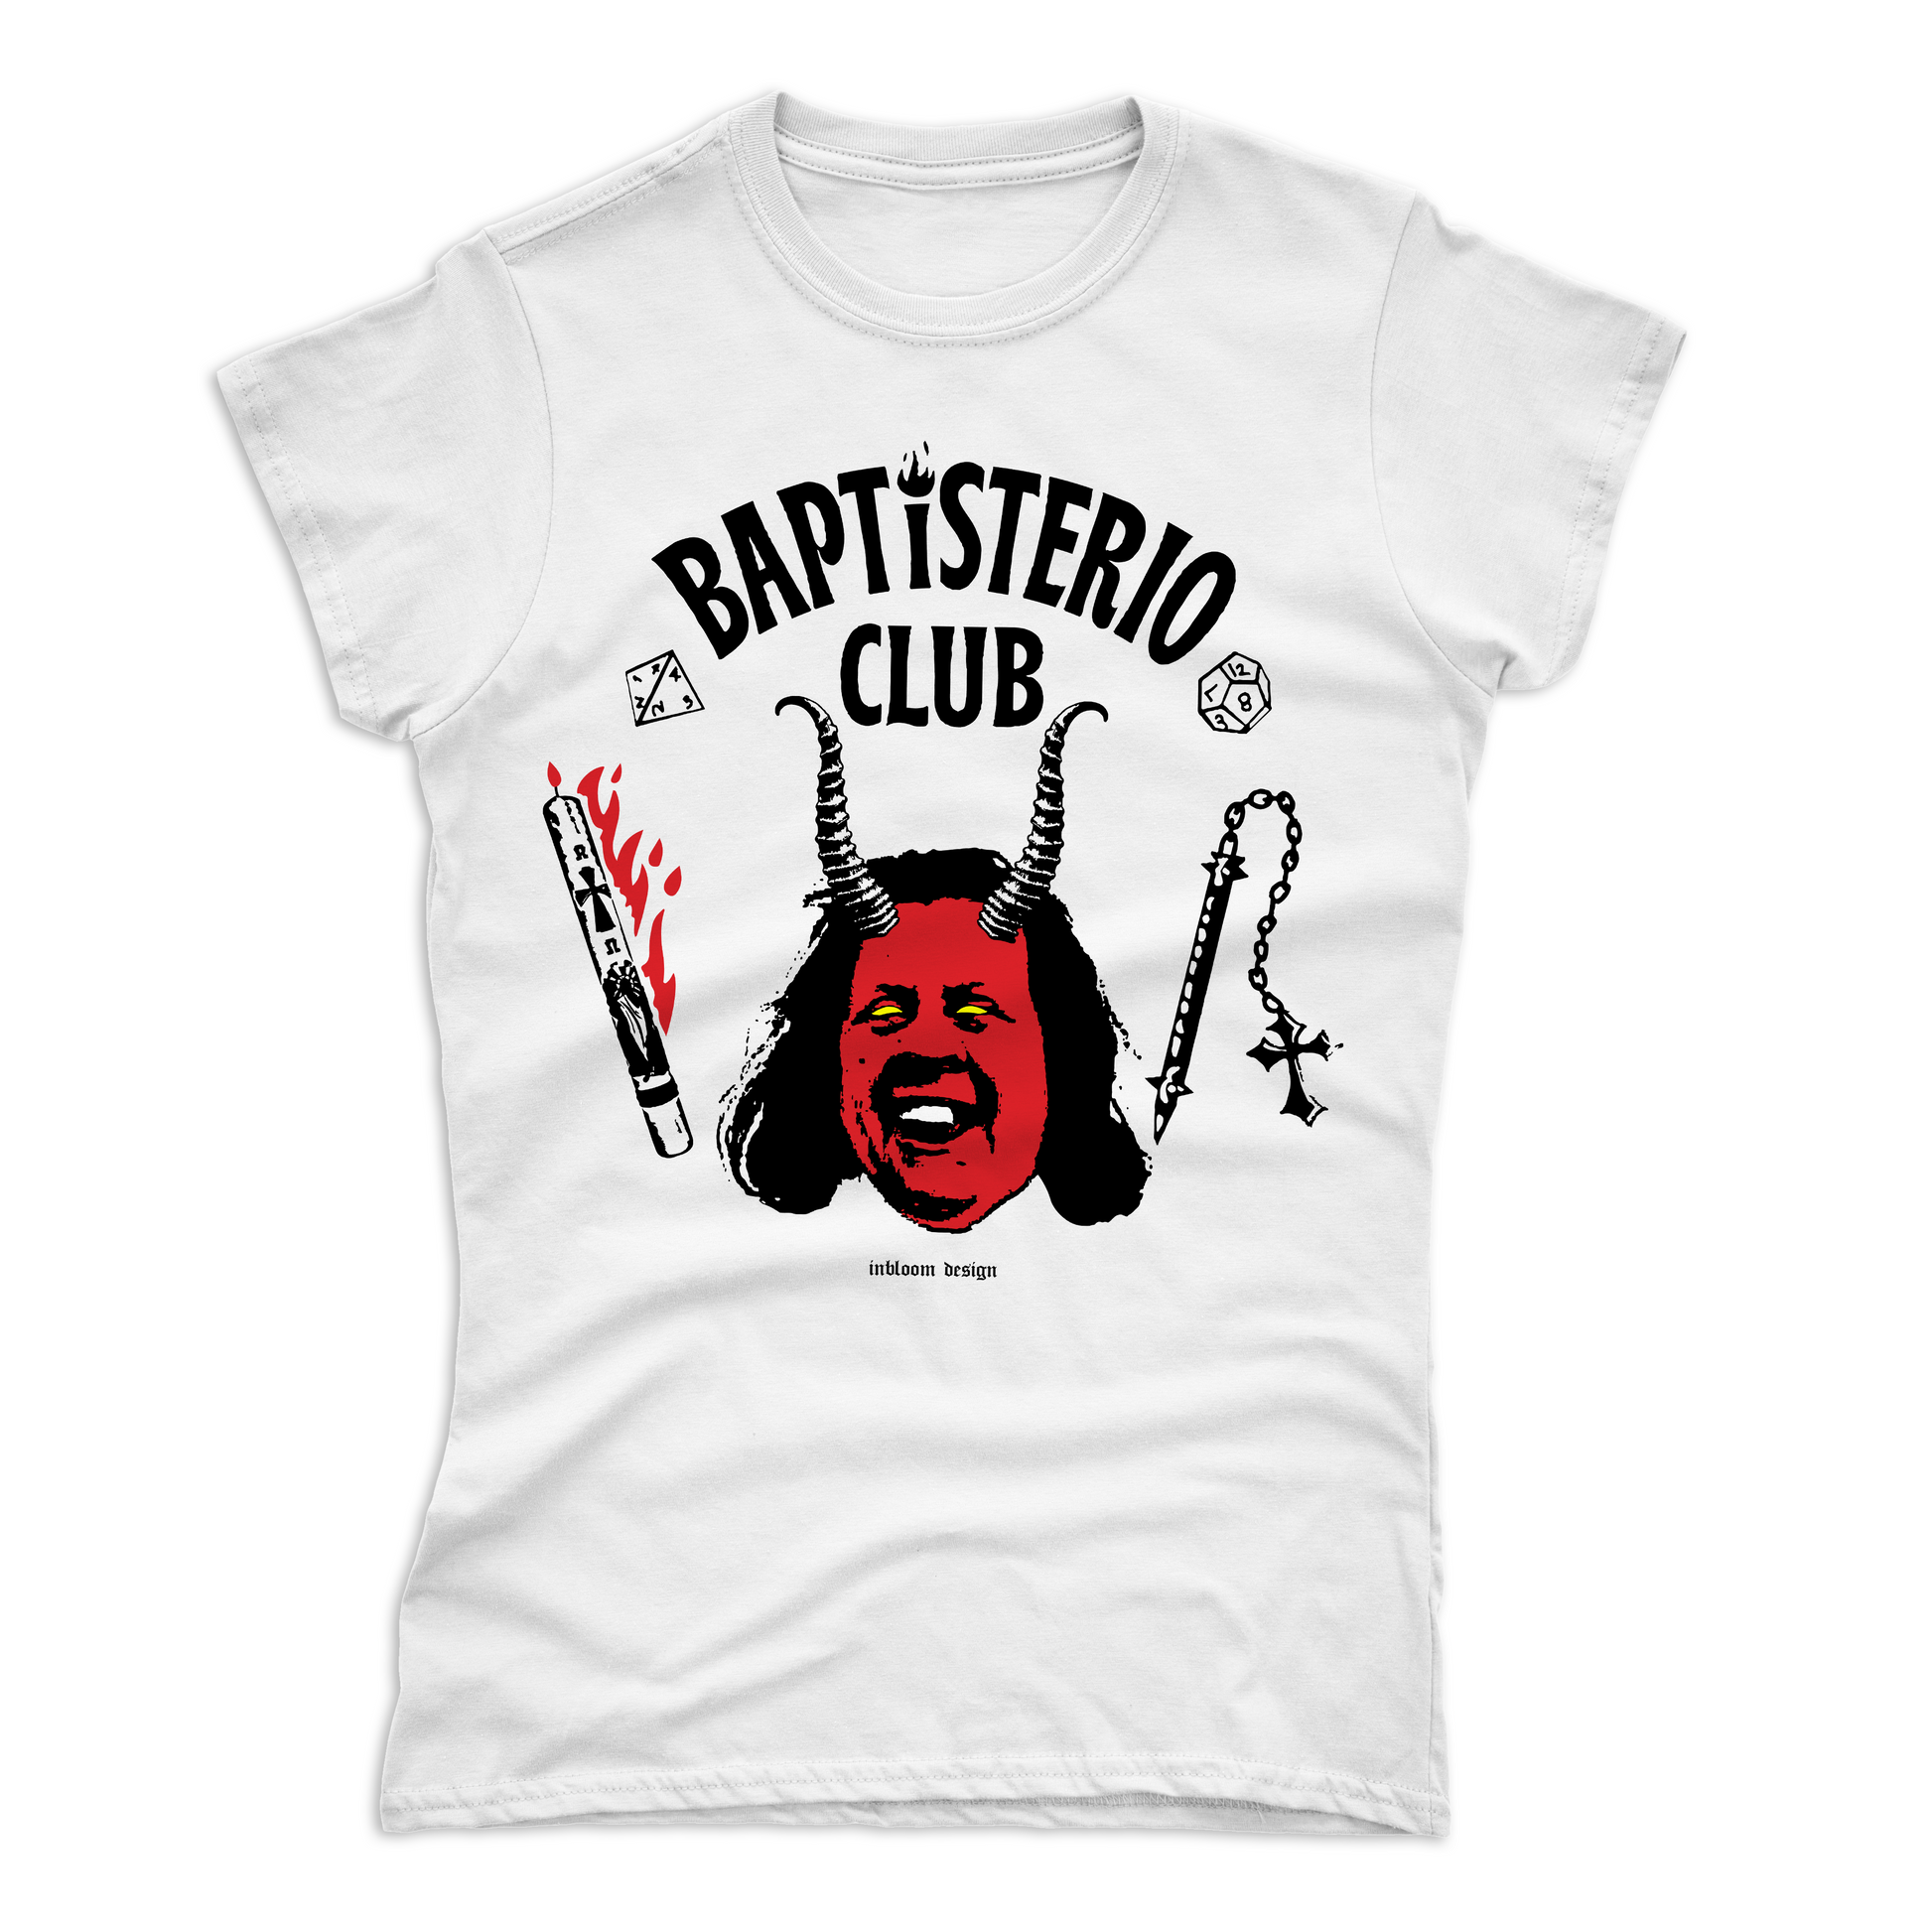 Baptisterio Club - Alex Inbloom Chica / XS